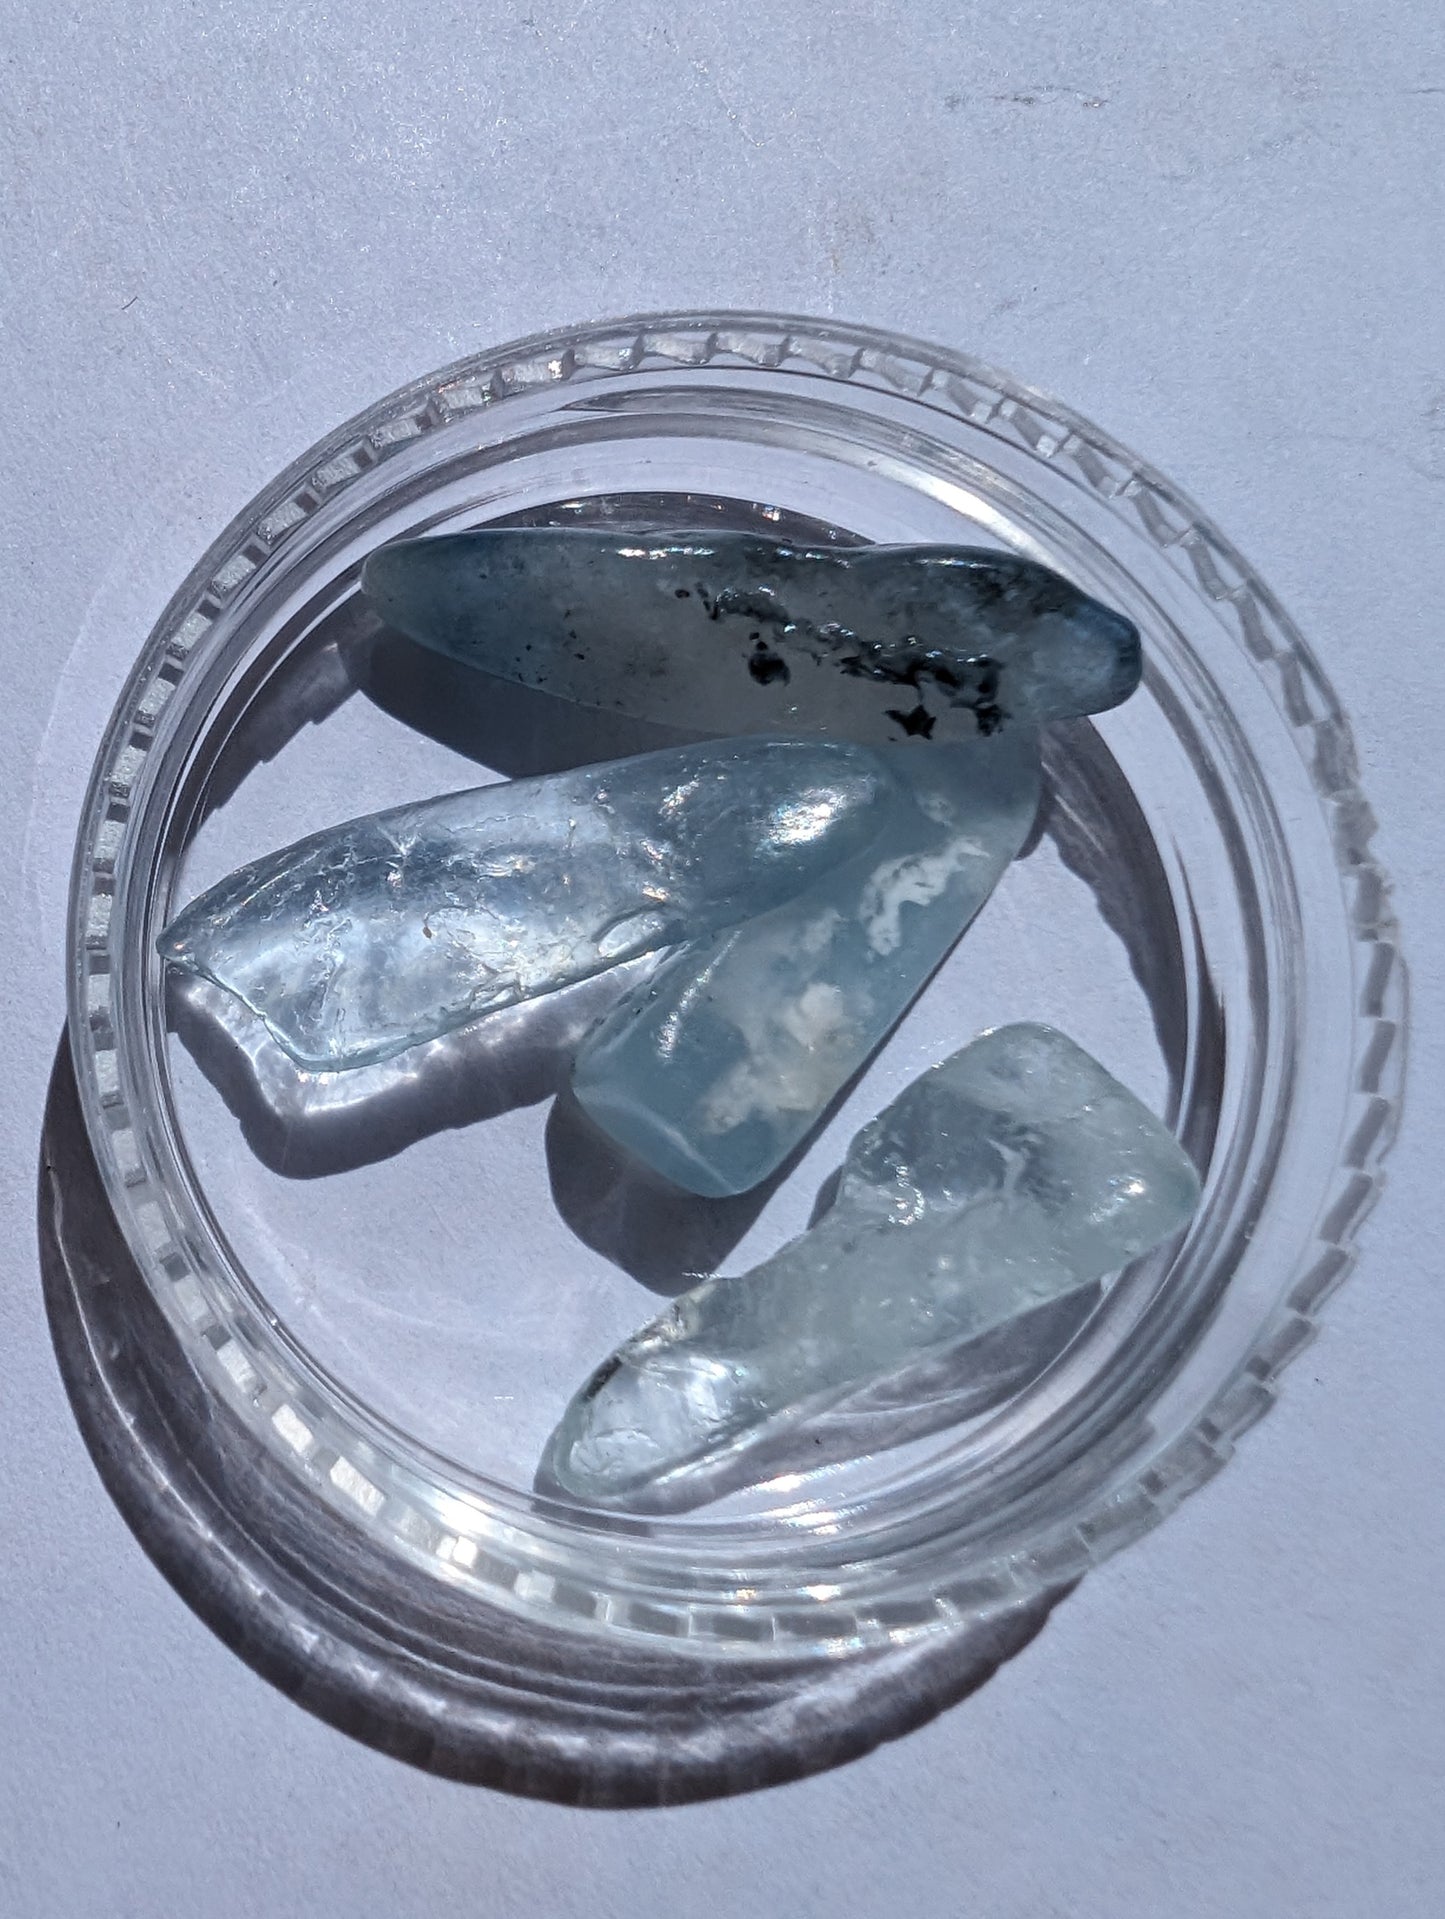 Aquamarine 4 polished crystals 4g